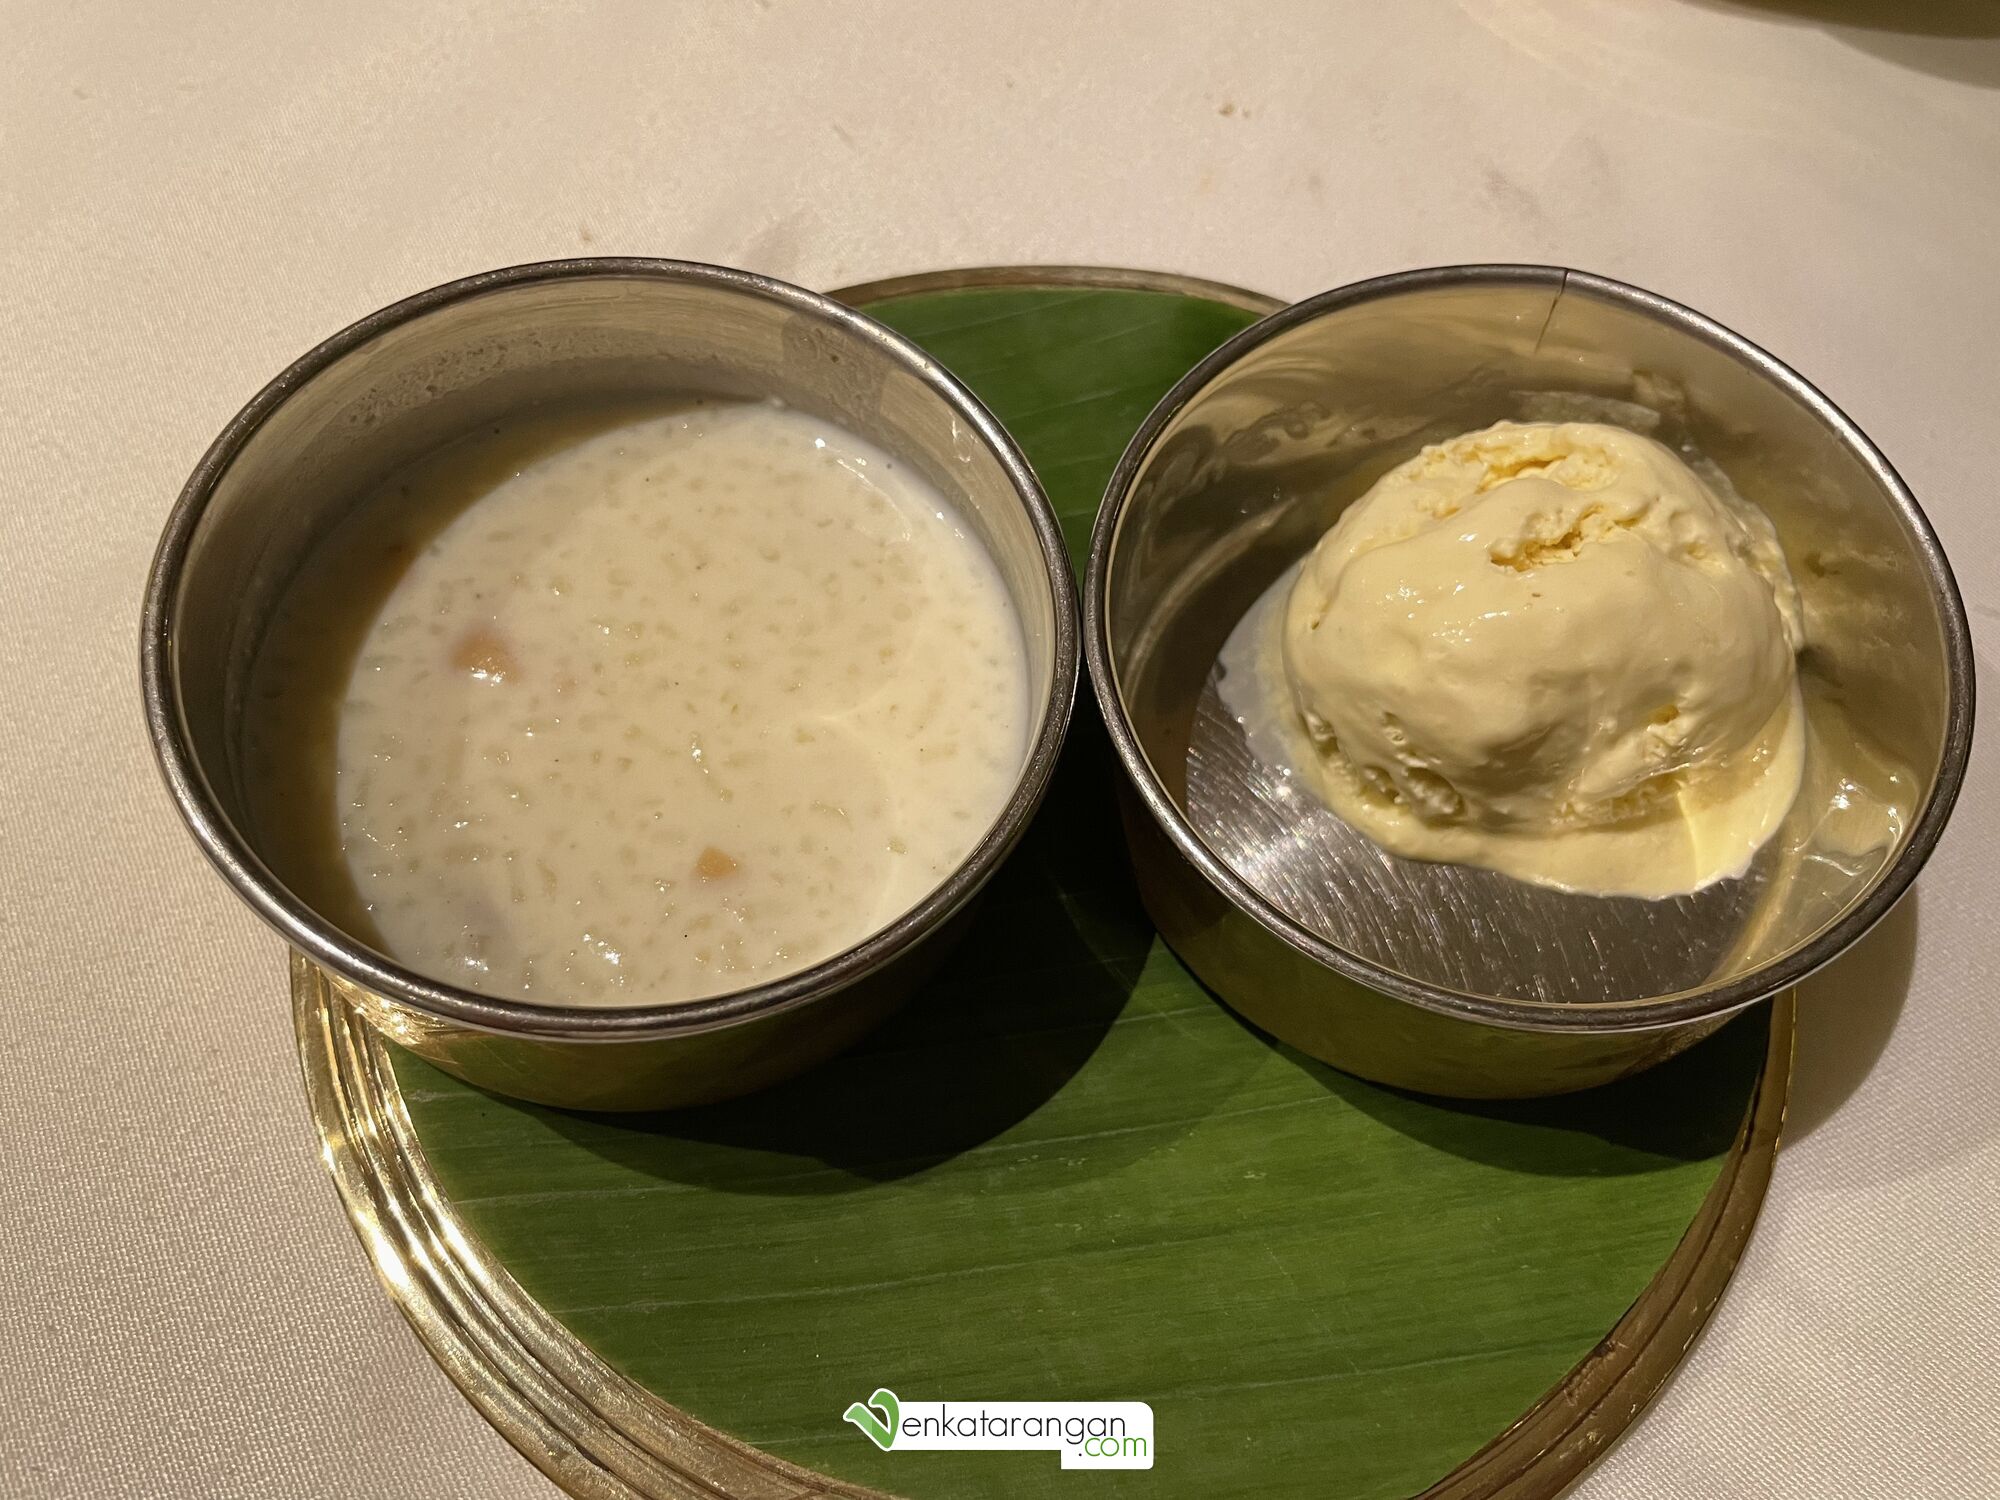 Dessert – Milk Payasam and Three-Fruits Icecream